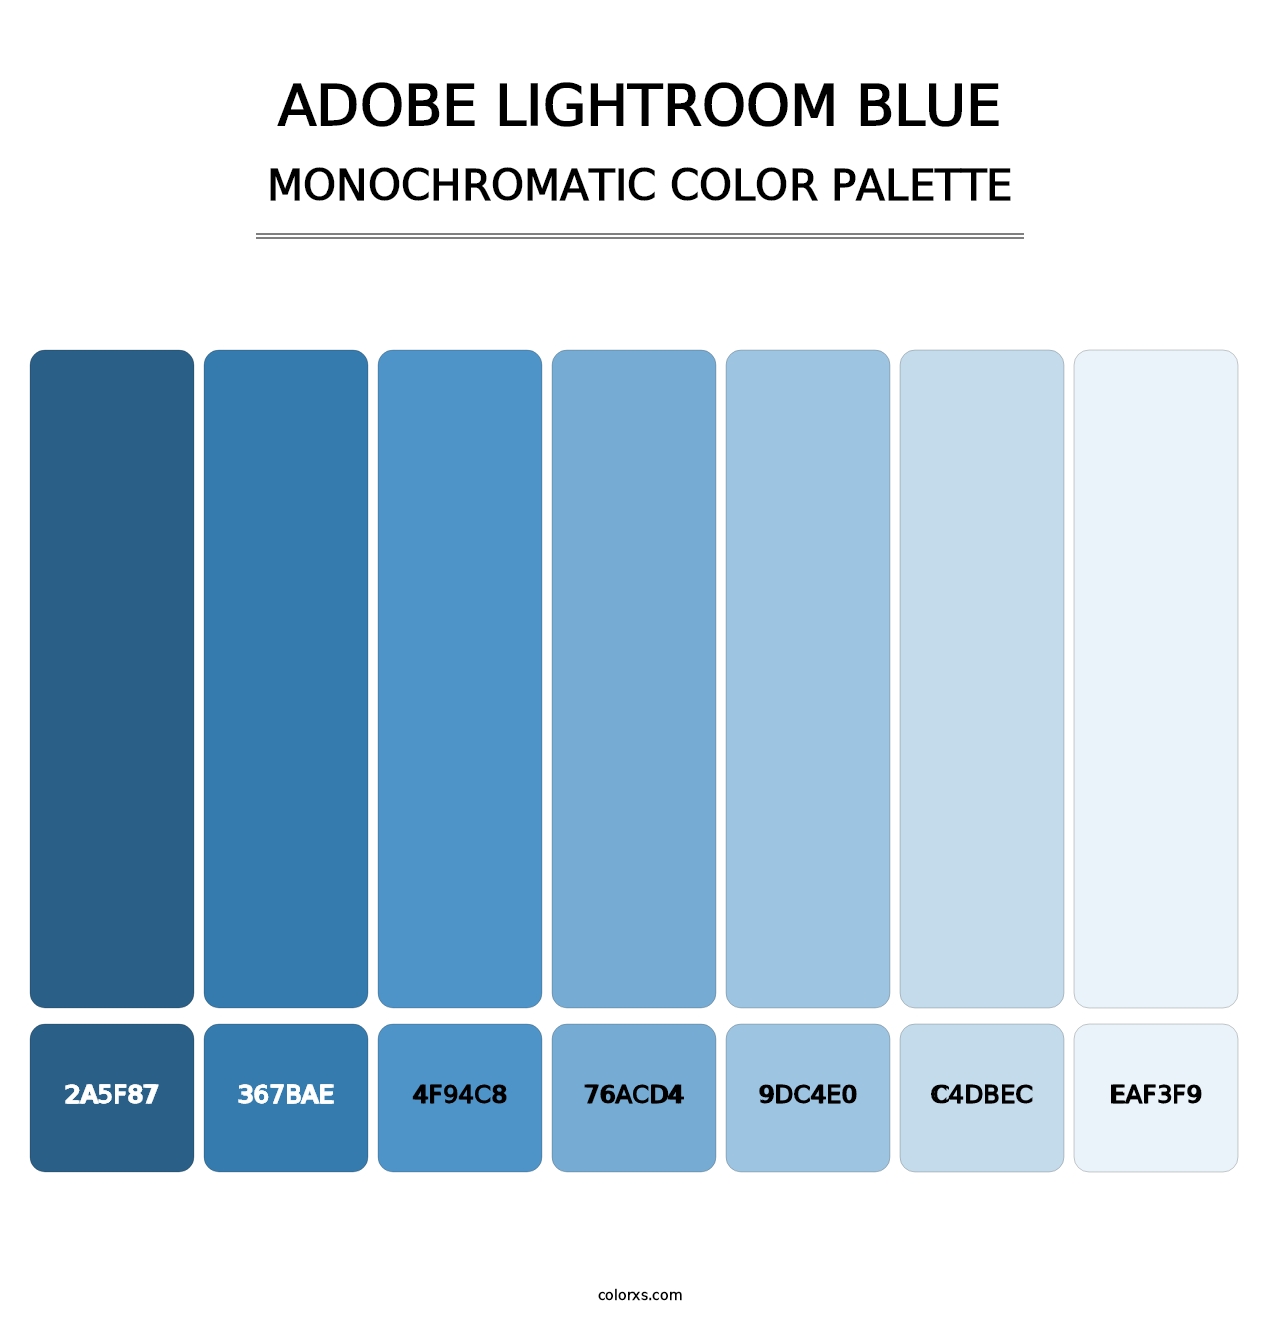 Adobe Lightroom Blue - Monochromatic Color Palette